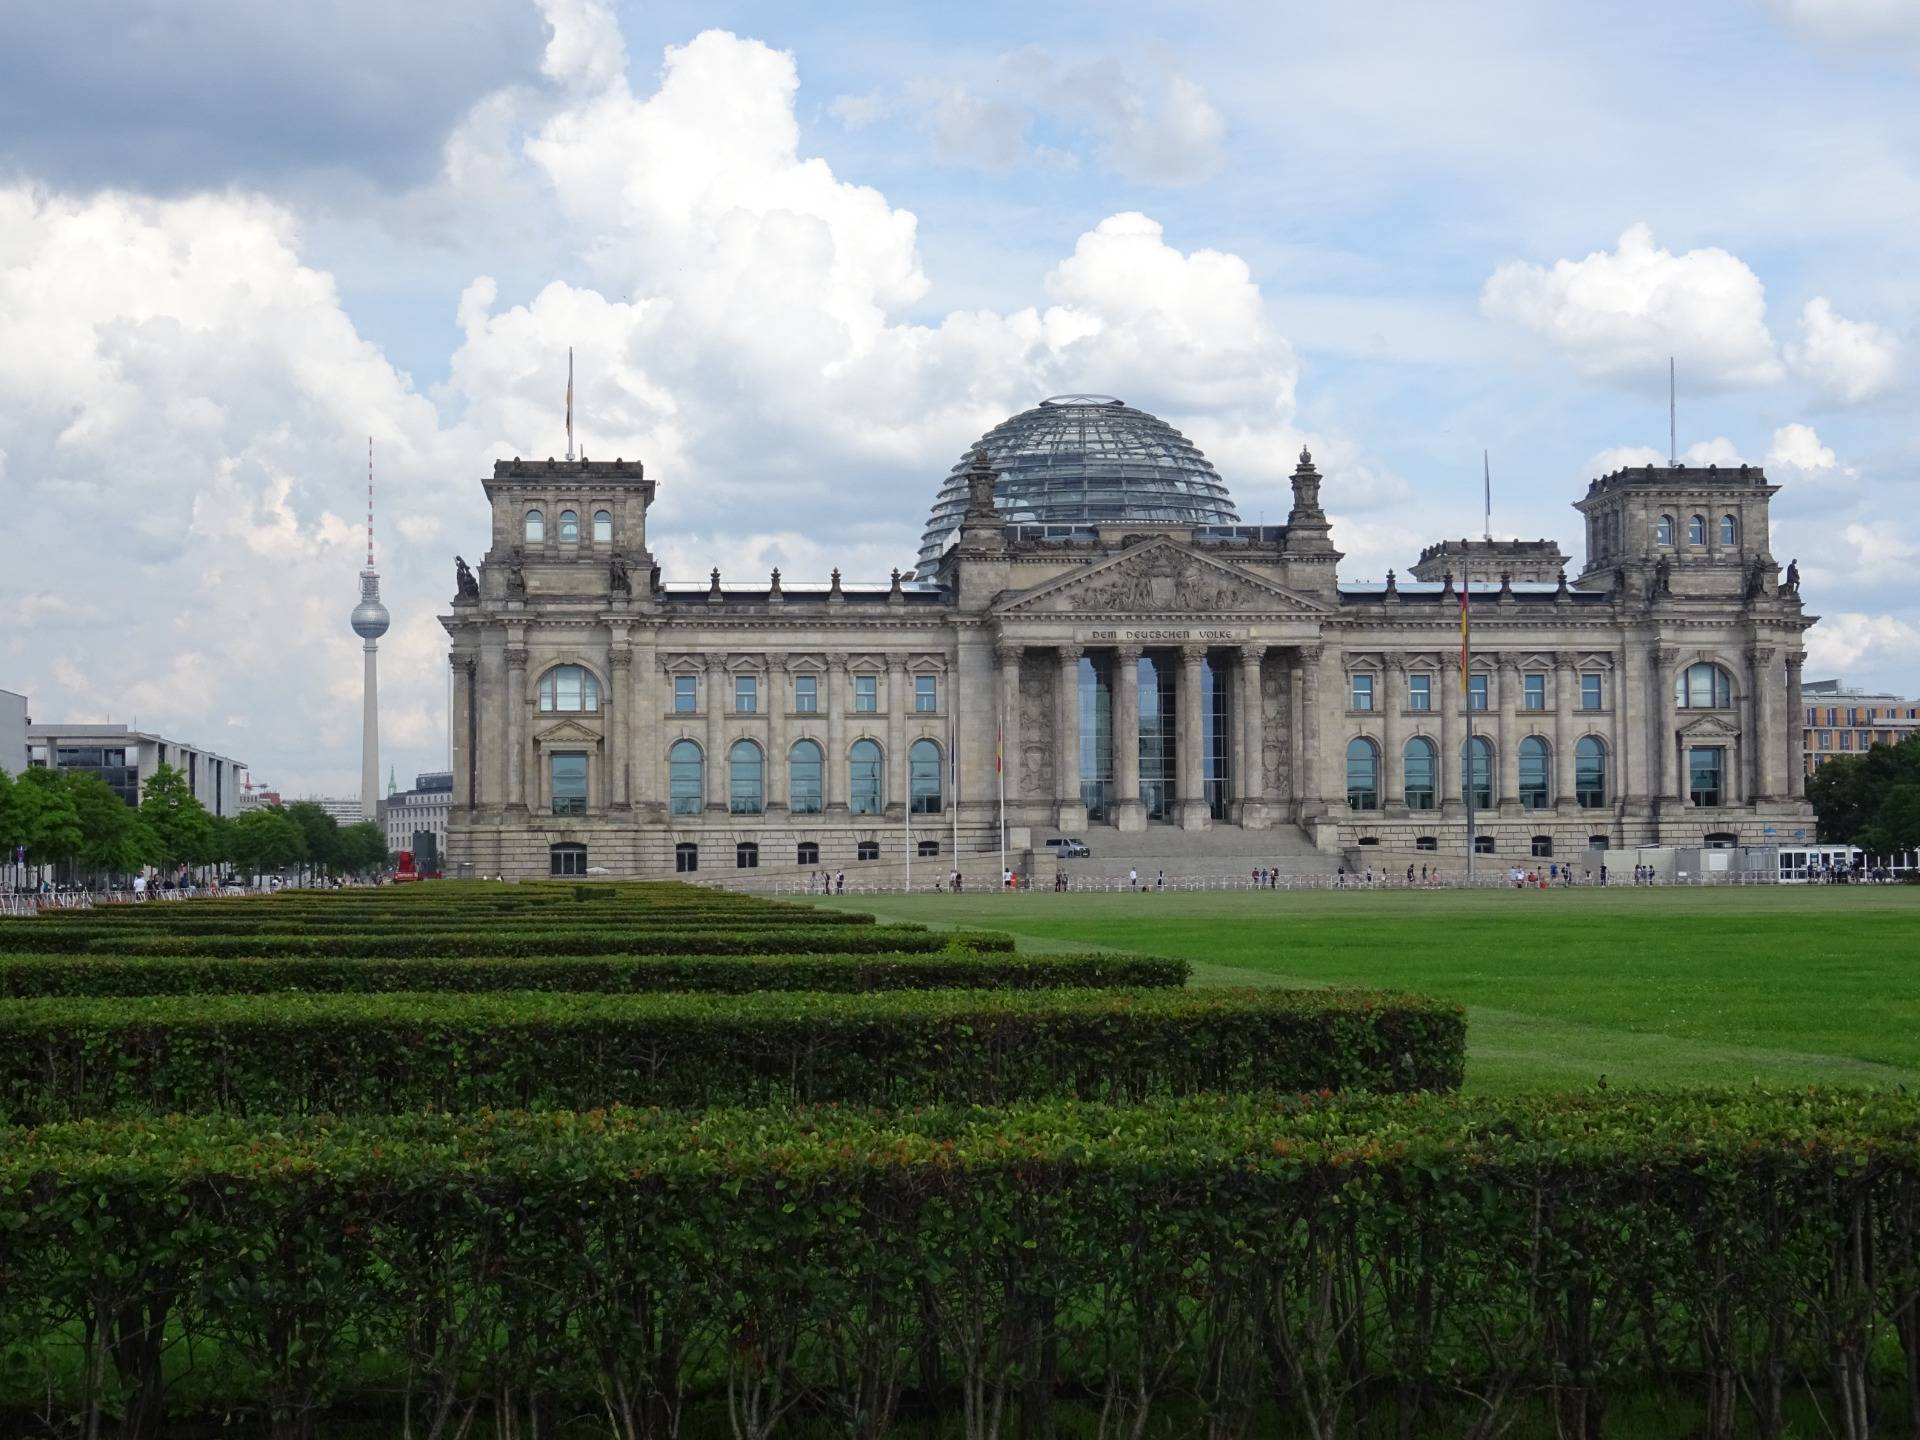 Reichstag building - The German parliament